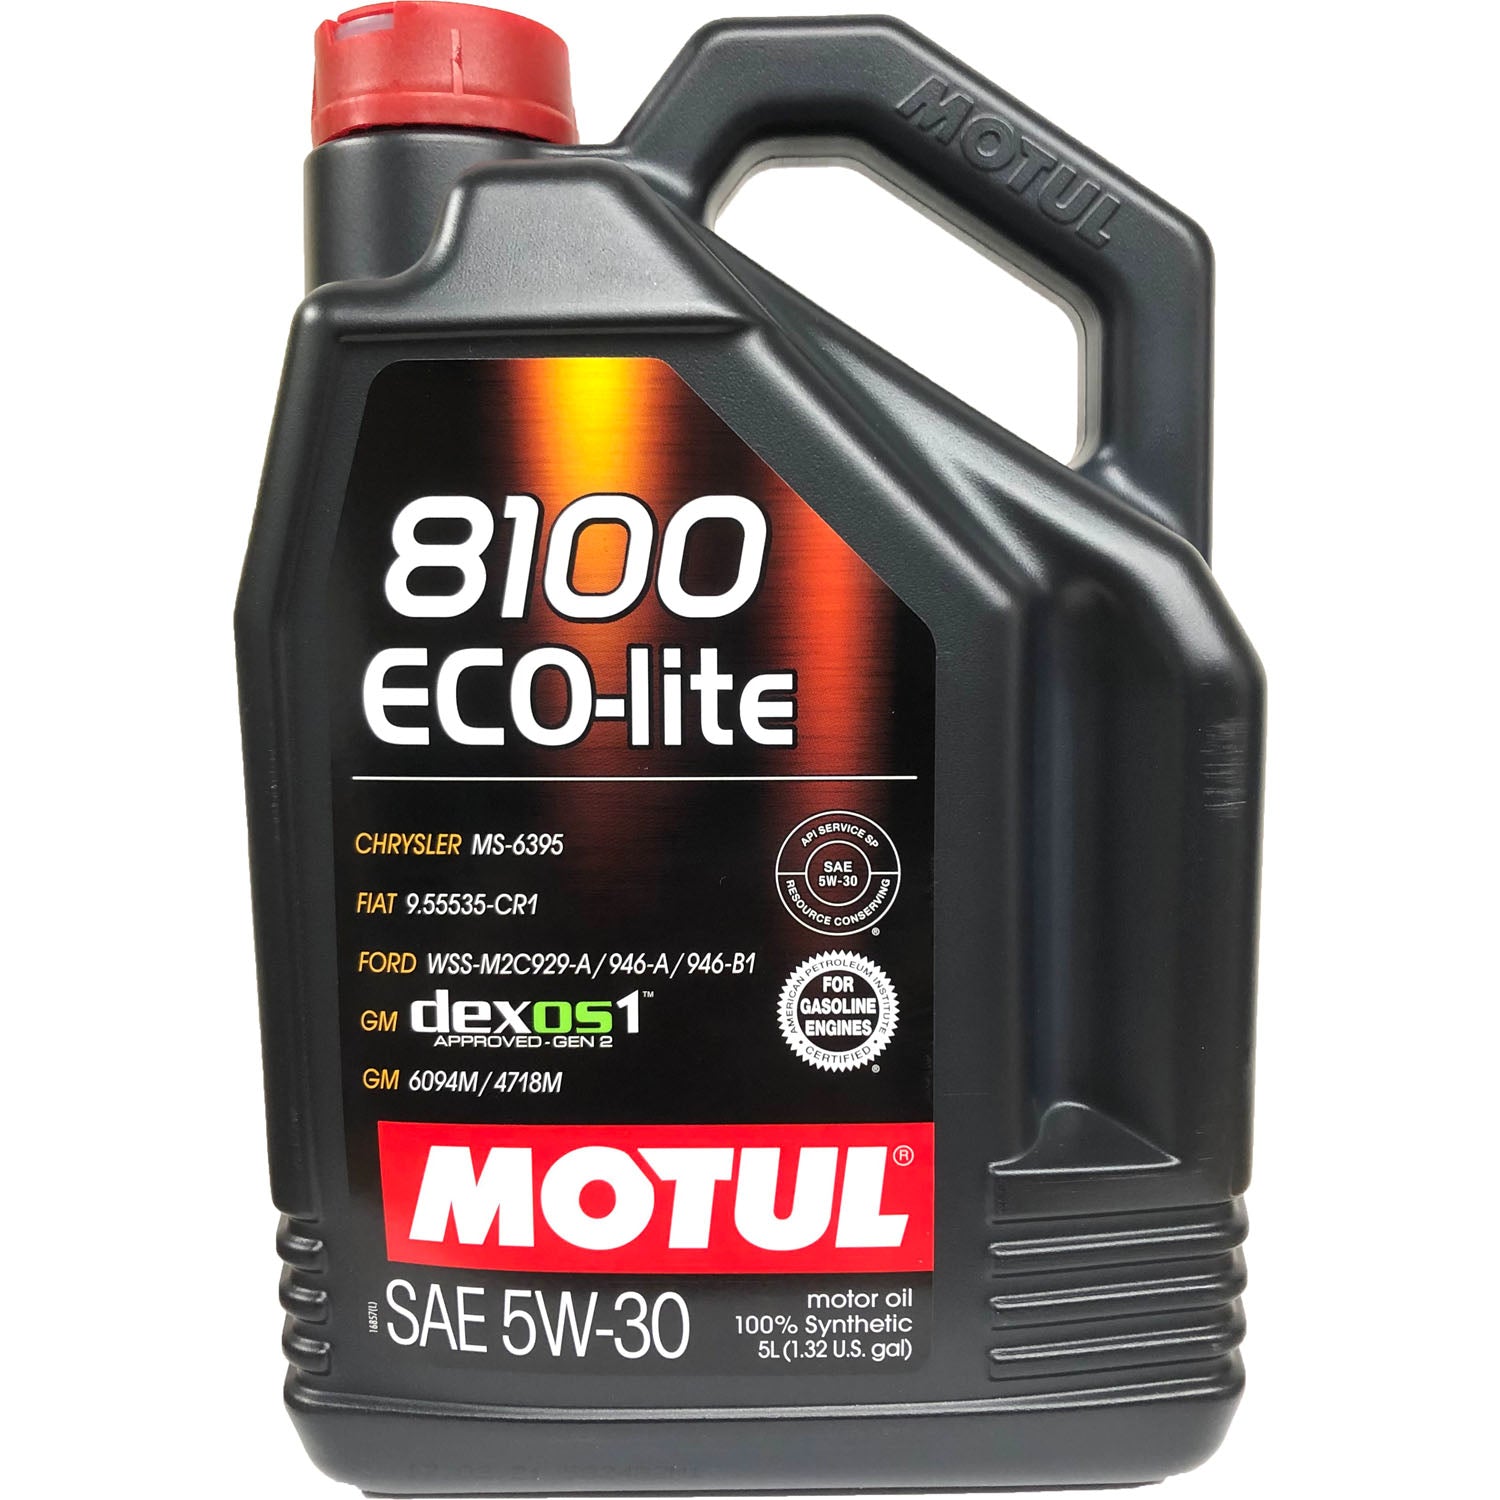 Motul 8100 Eco-Lite Synthetic Motor Oil 5W30 - 5 Liter